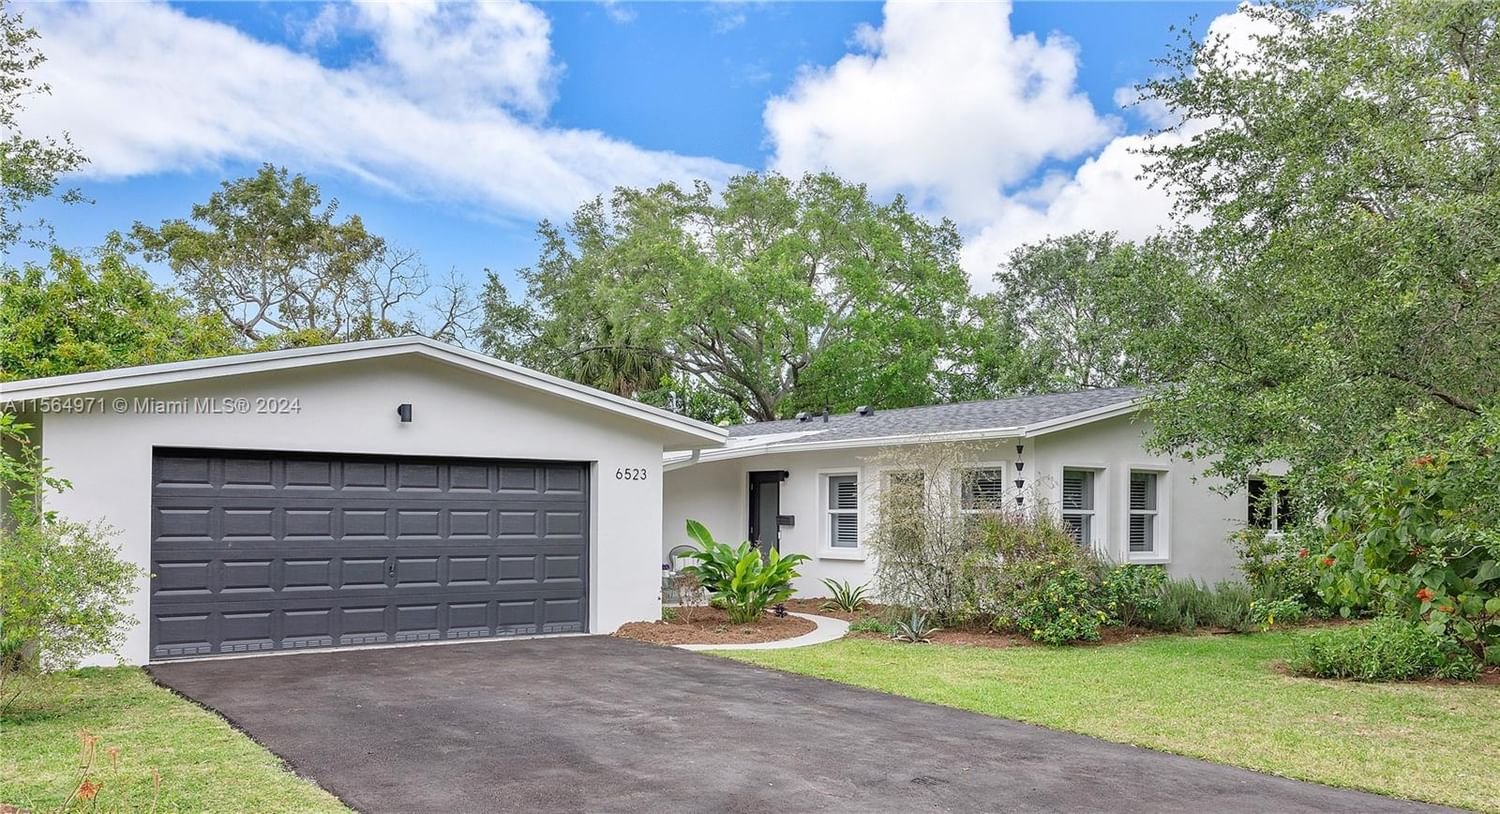 Real estate property located at 6523 77th Ter, Miami-Dade County, LUDLUM ESTATES, South Miami, FL